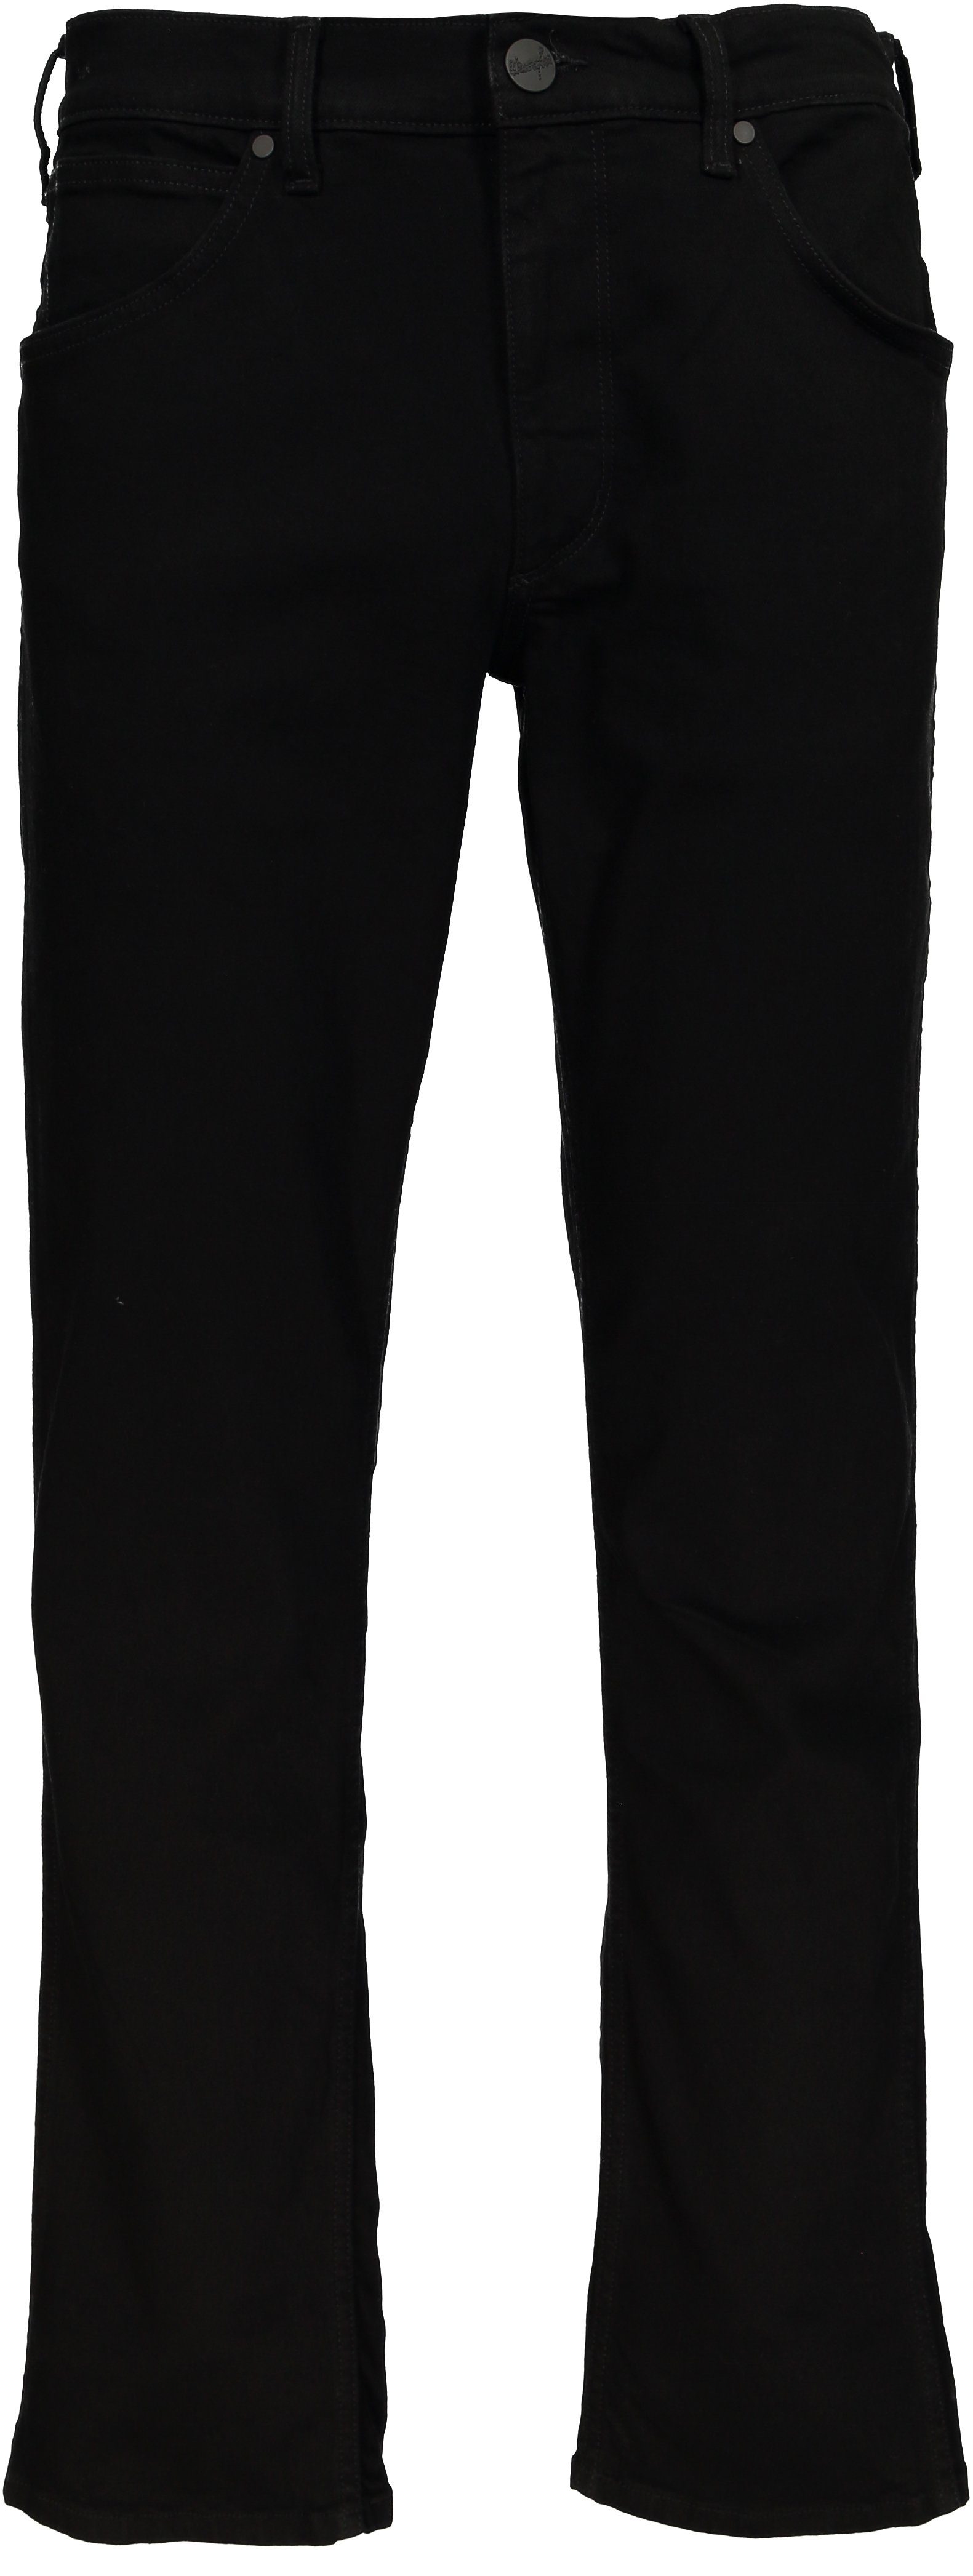 Wrangler 5-Pocket-Jeans WRANGLER GREENSBORO black valley W15QHP19A